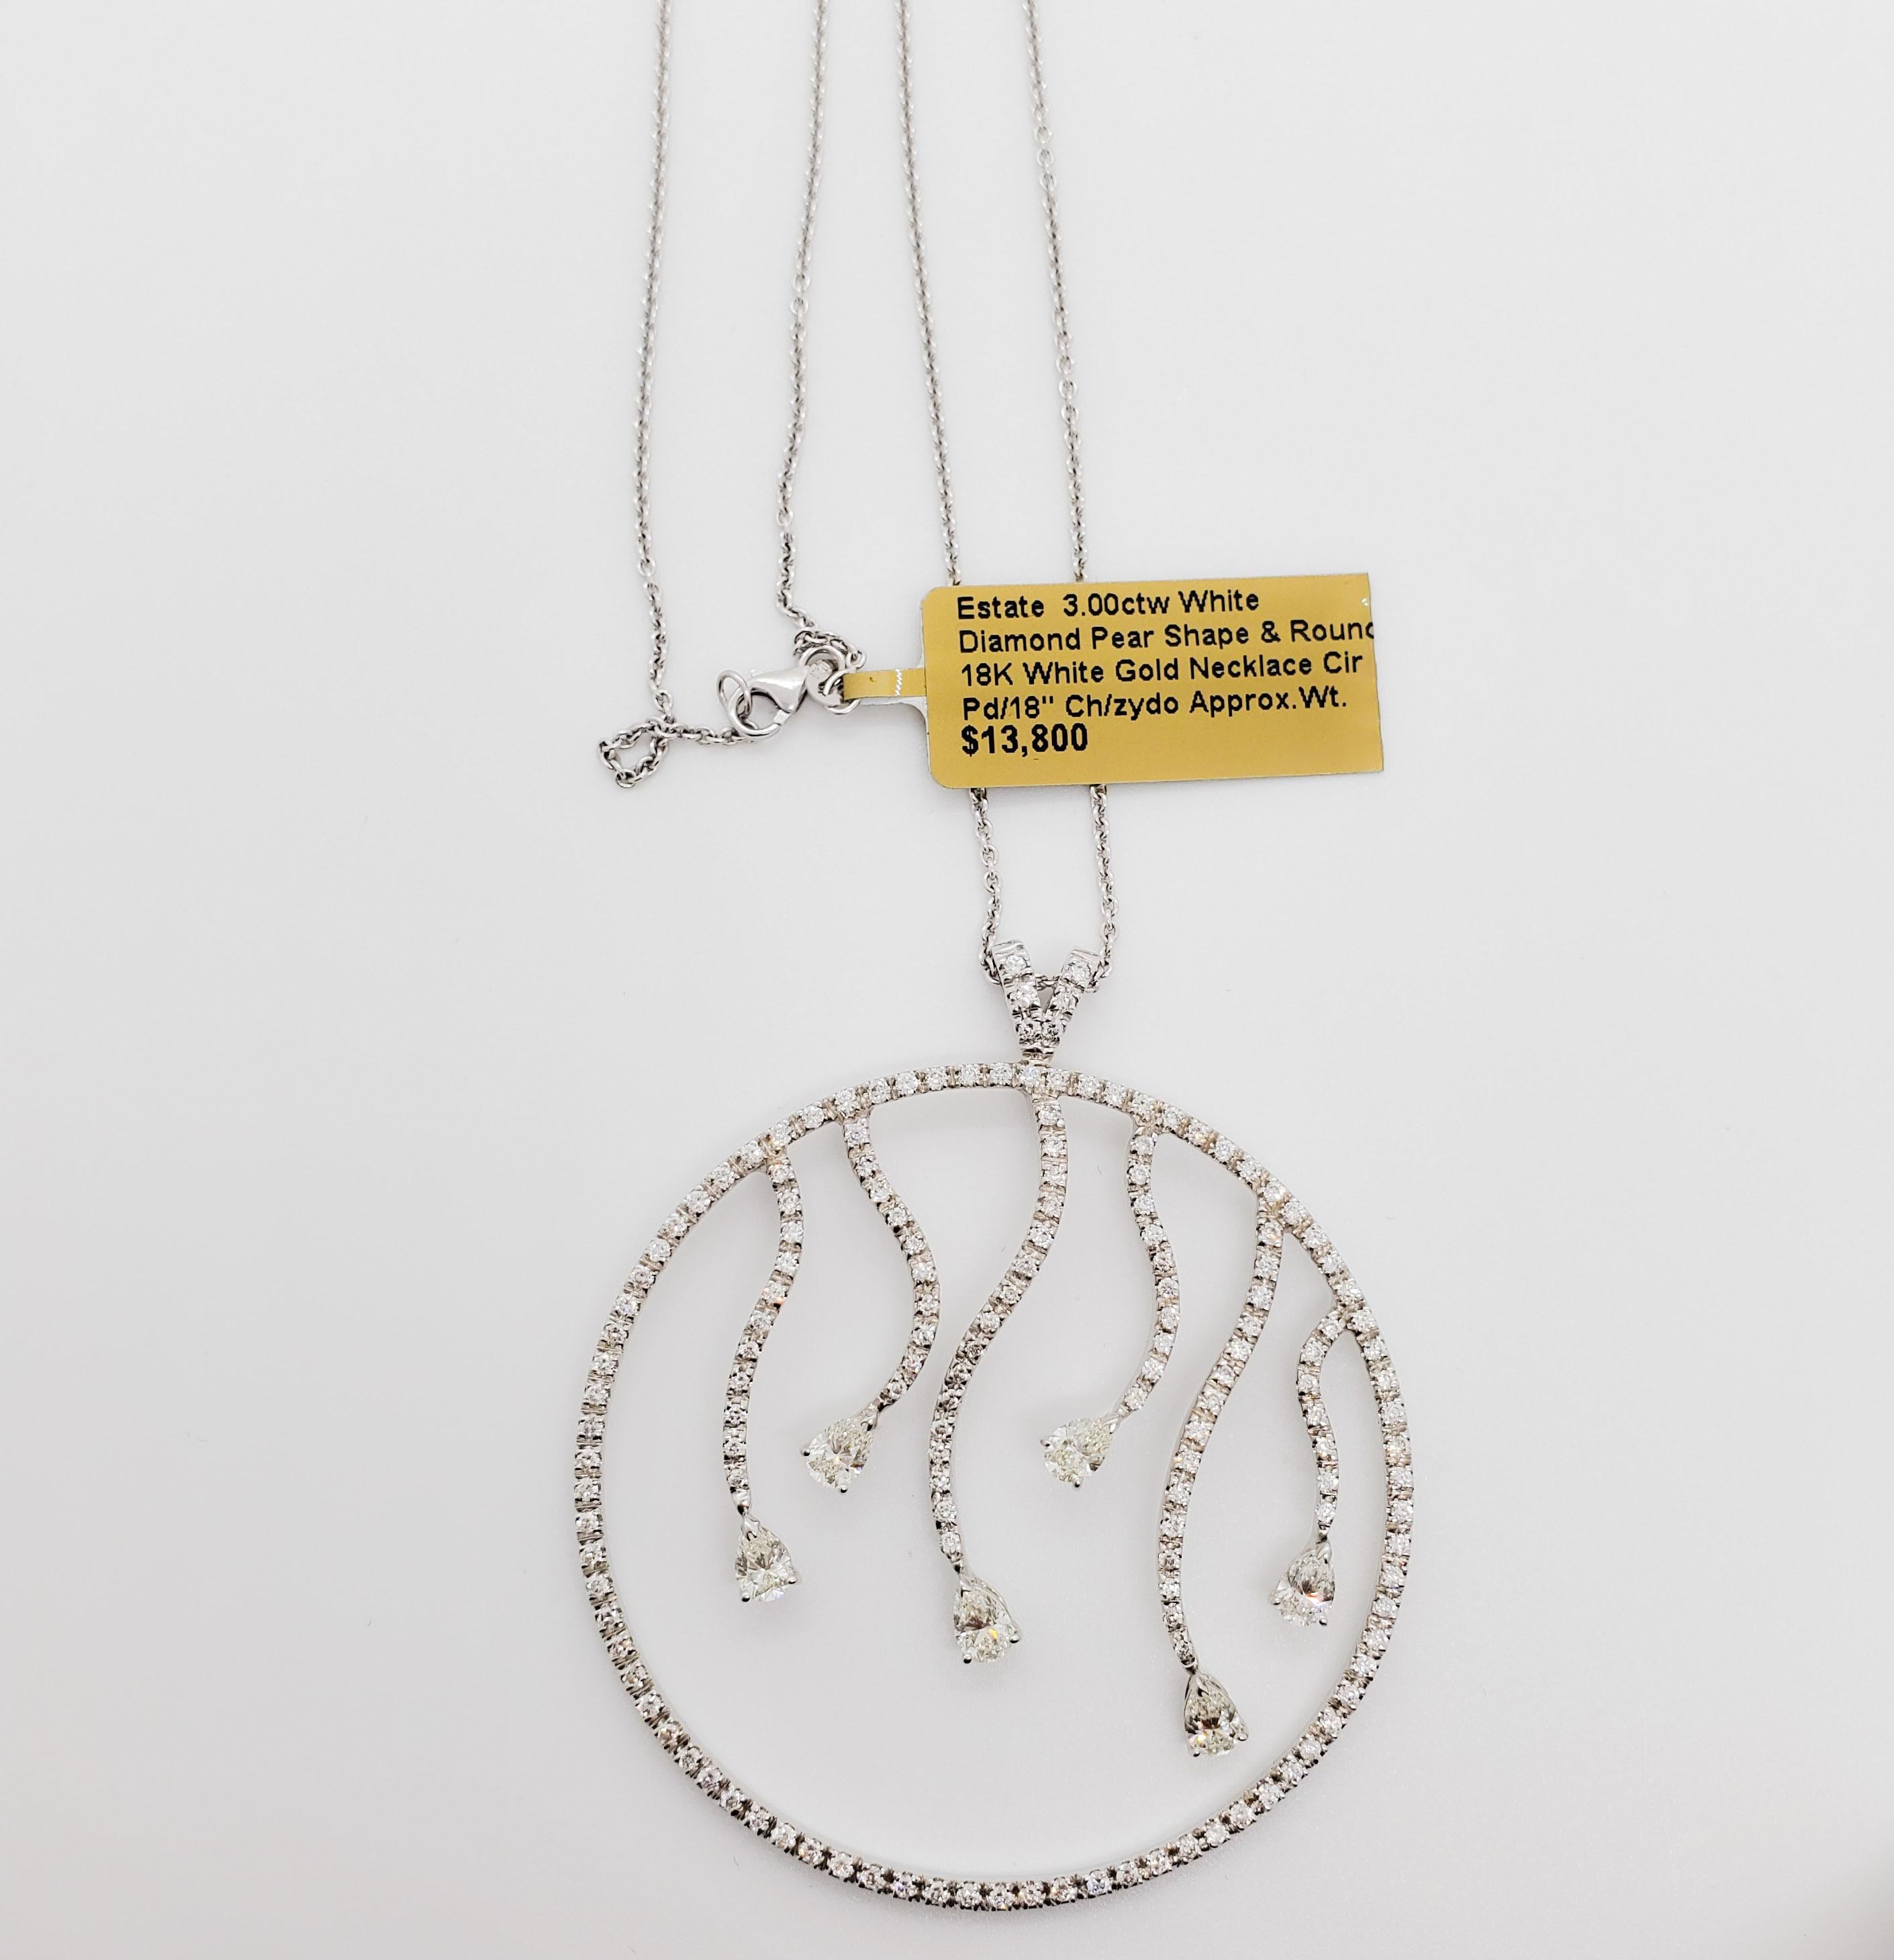 Estate Zydo Diamond Open Circle Pendant Necklace in 18k White Gold For Sale 4